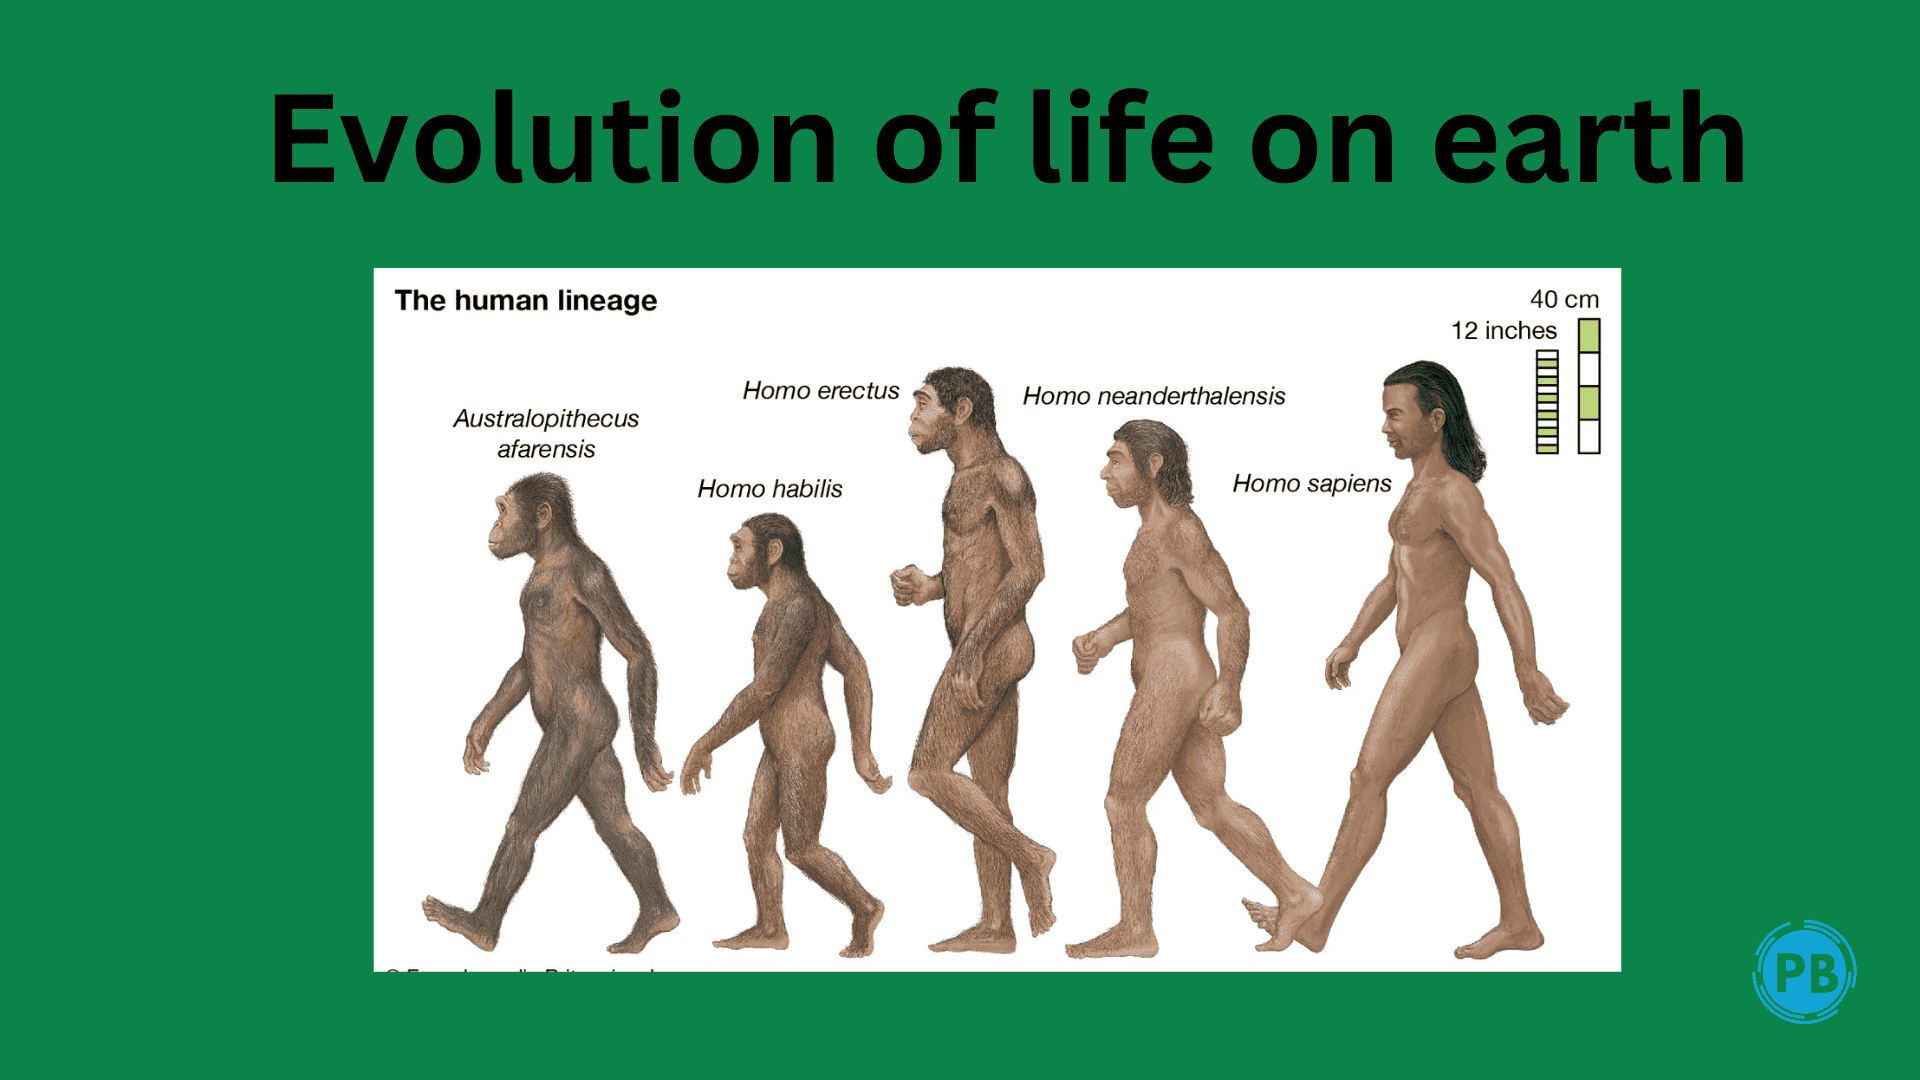 Evolution of life on earth details